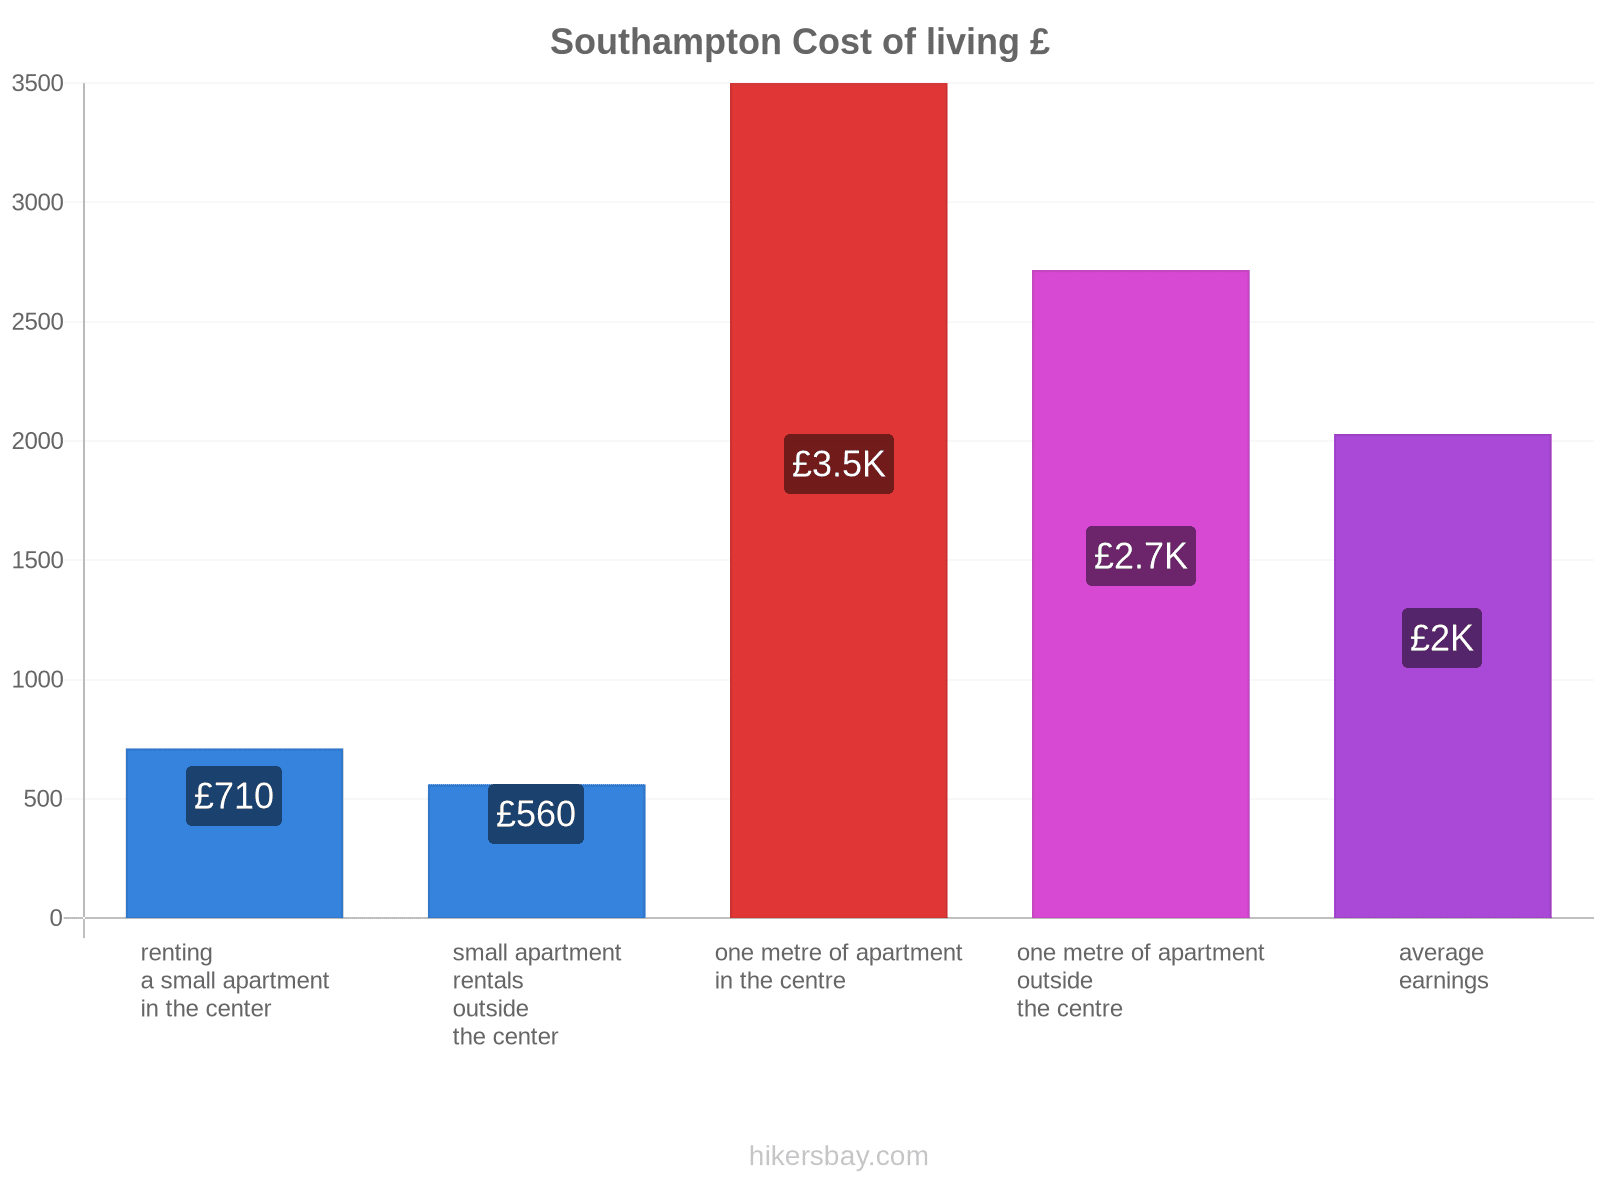 Southampton cost of living hikersbay.com